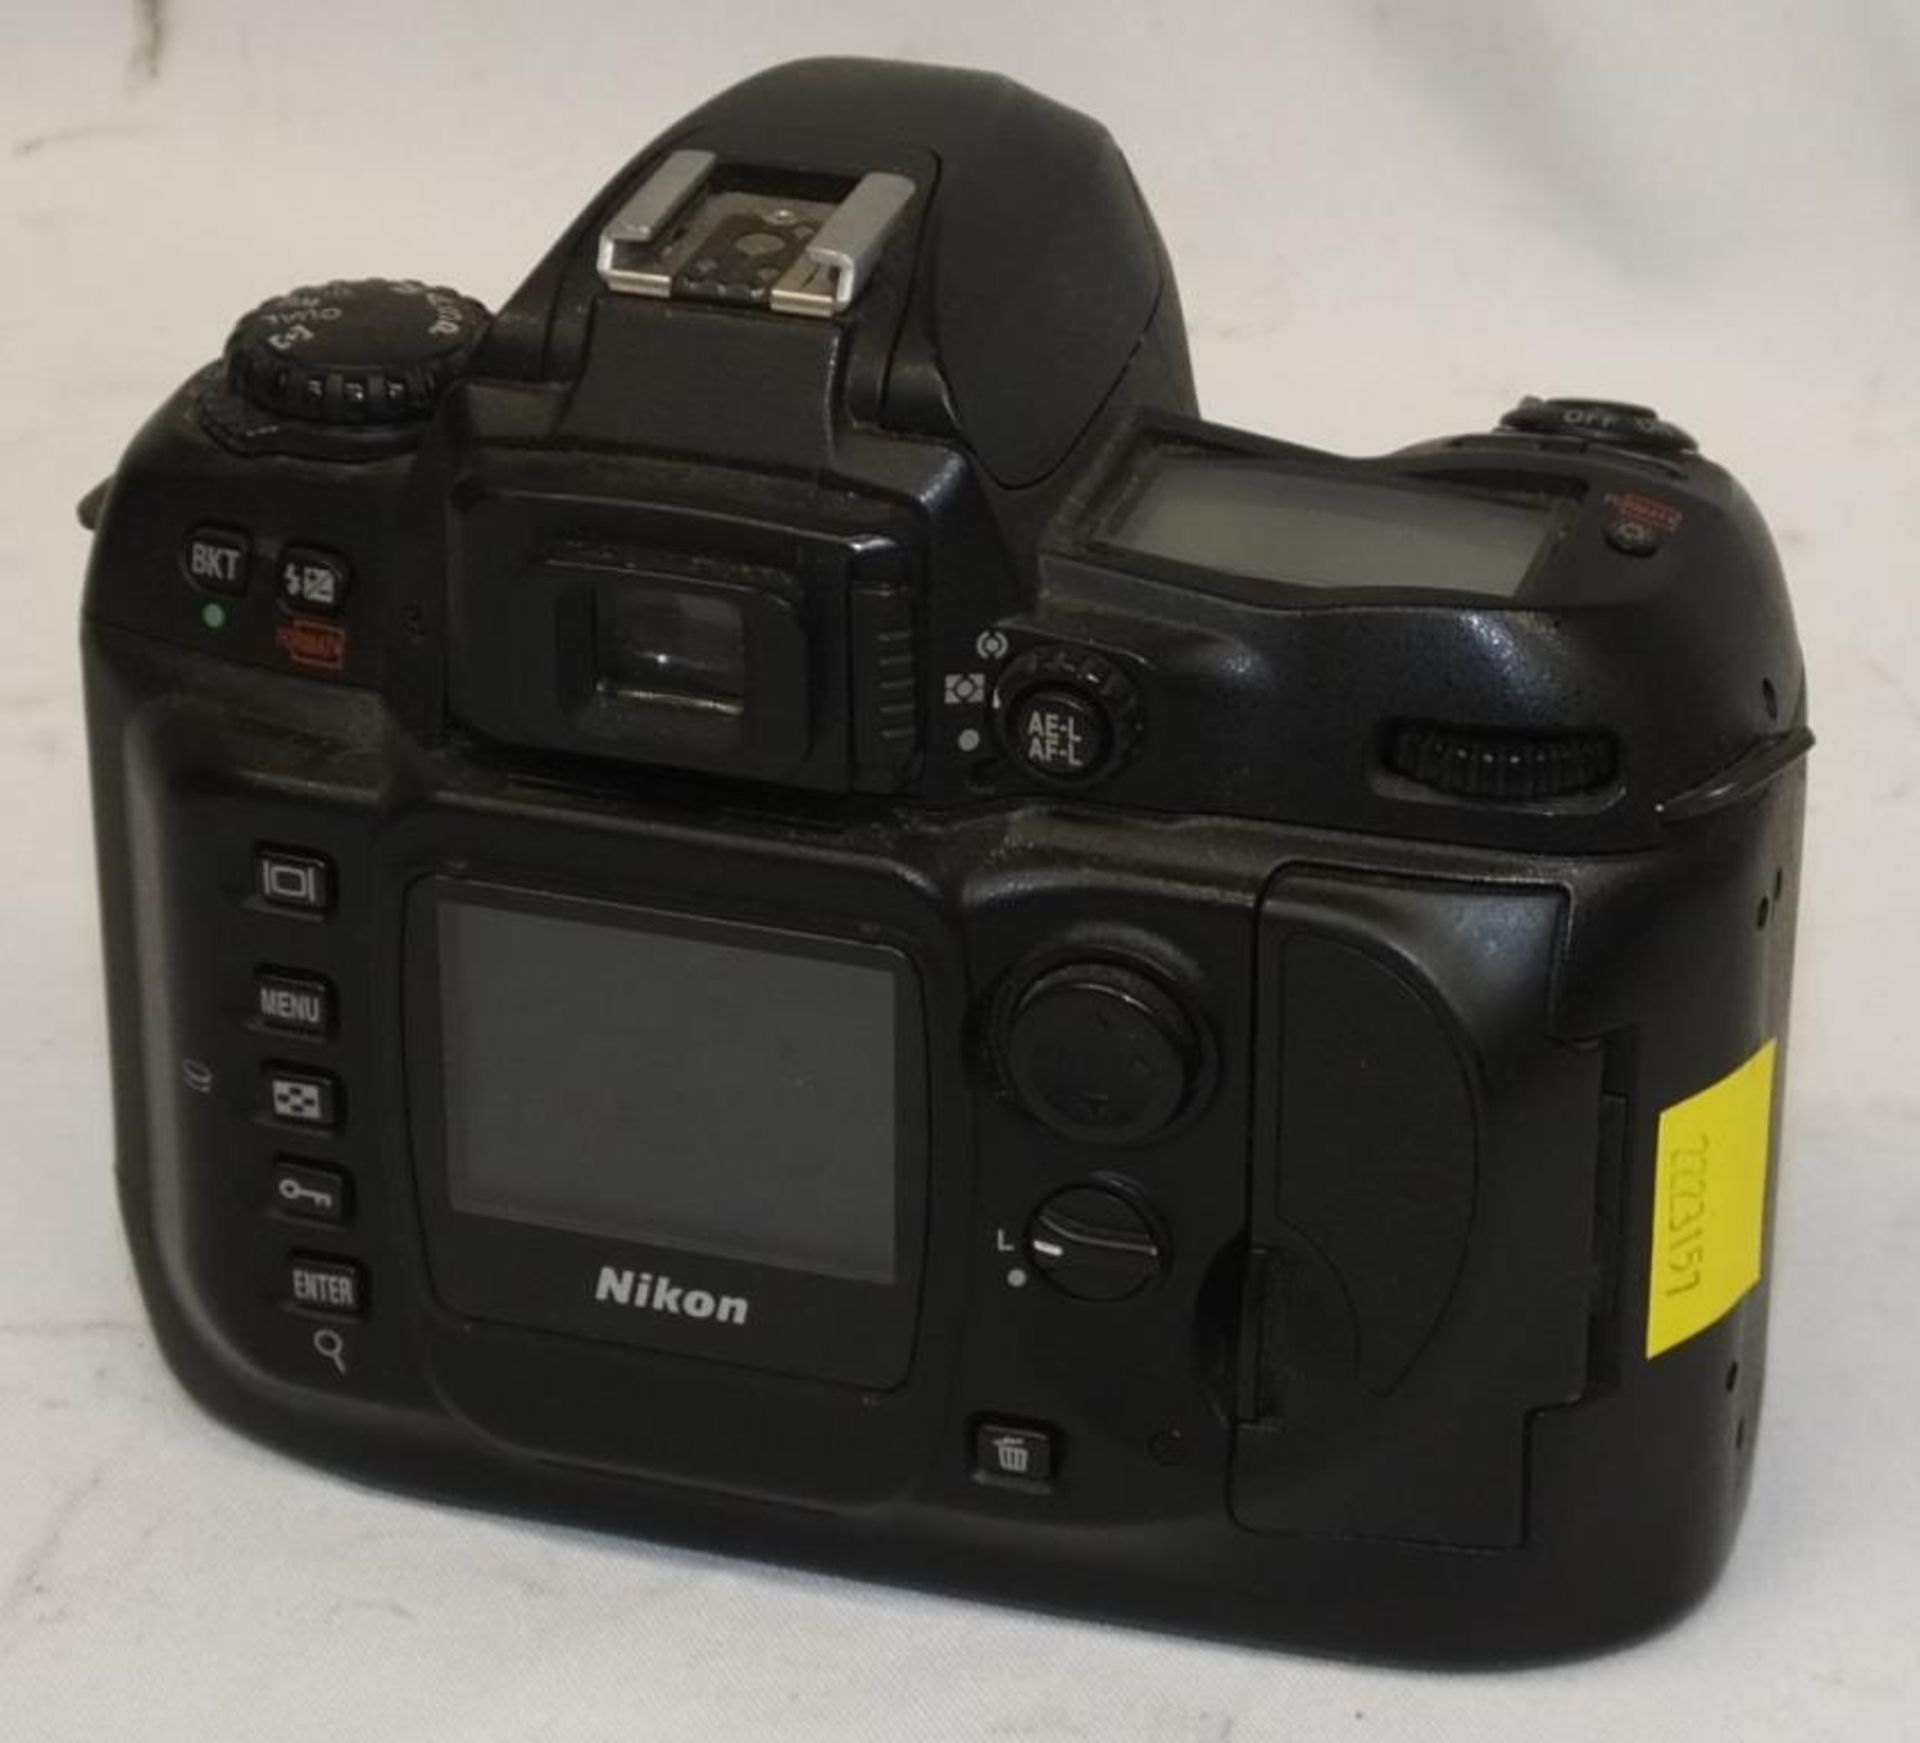 Nikon D100 camera body - serial 2268387 - no battery, no memory card - Image 4 of 4